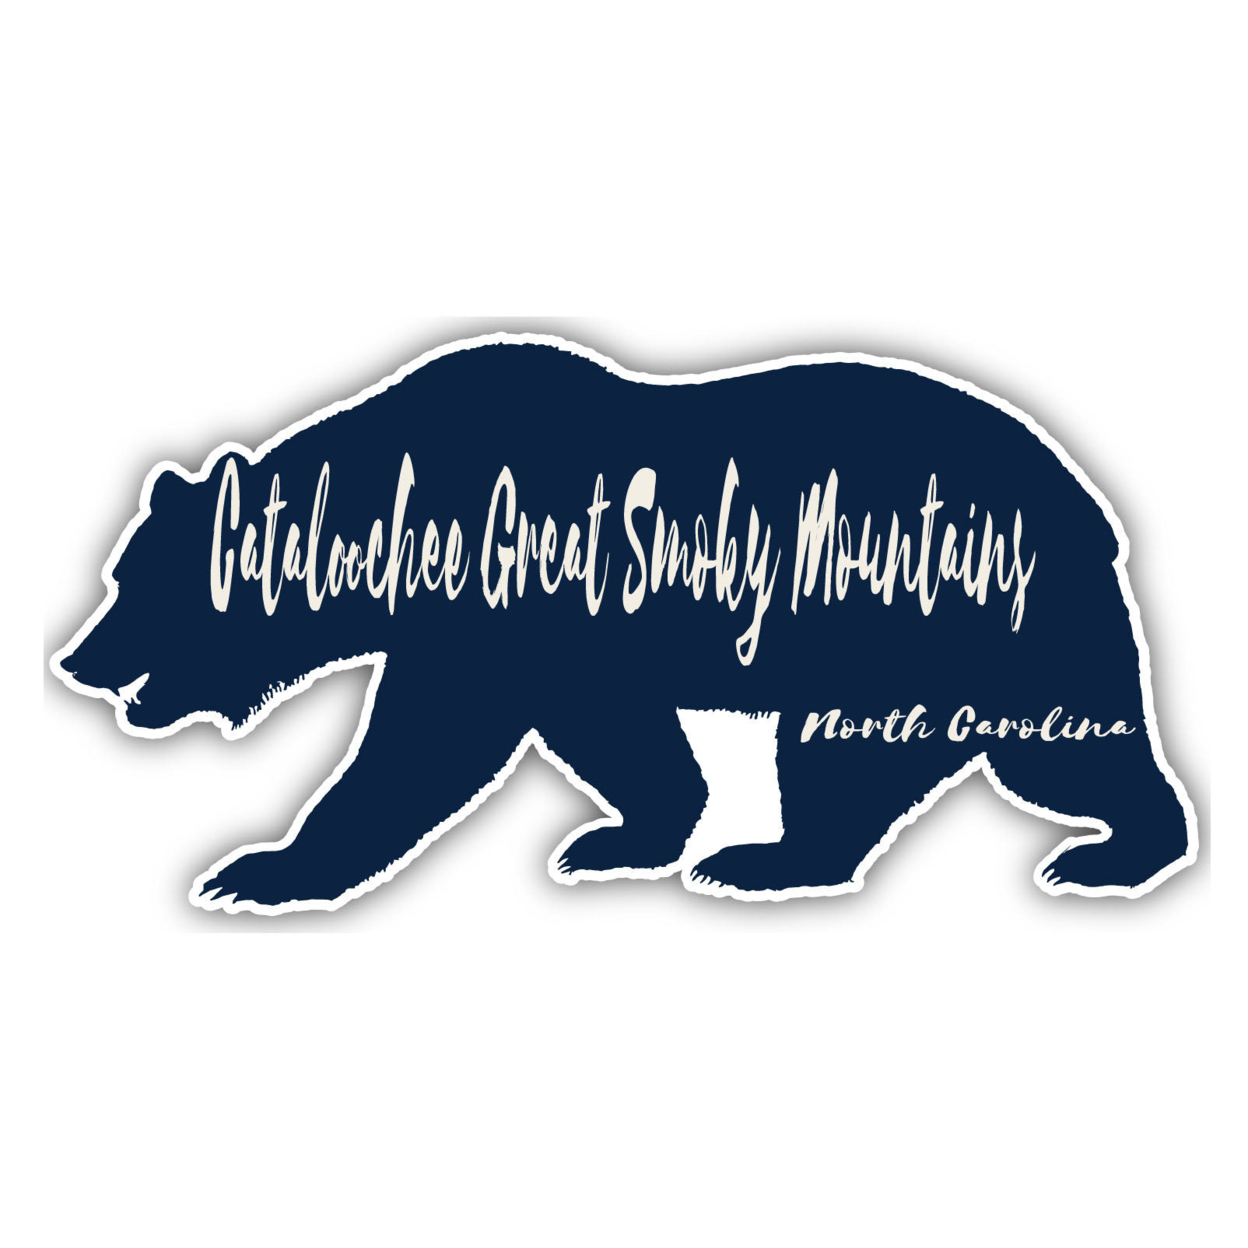 Cataloochee Great Smoky Mountains North Carolina Souvenir Decorative Stickers (Choose Theme And Size) - Single Unit, 6-Inch, Bear